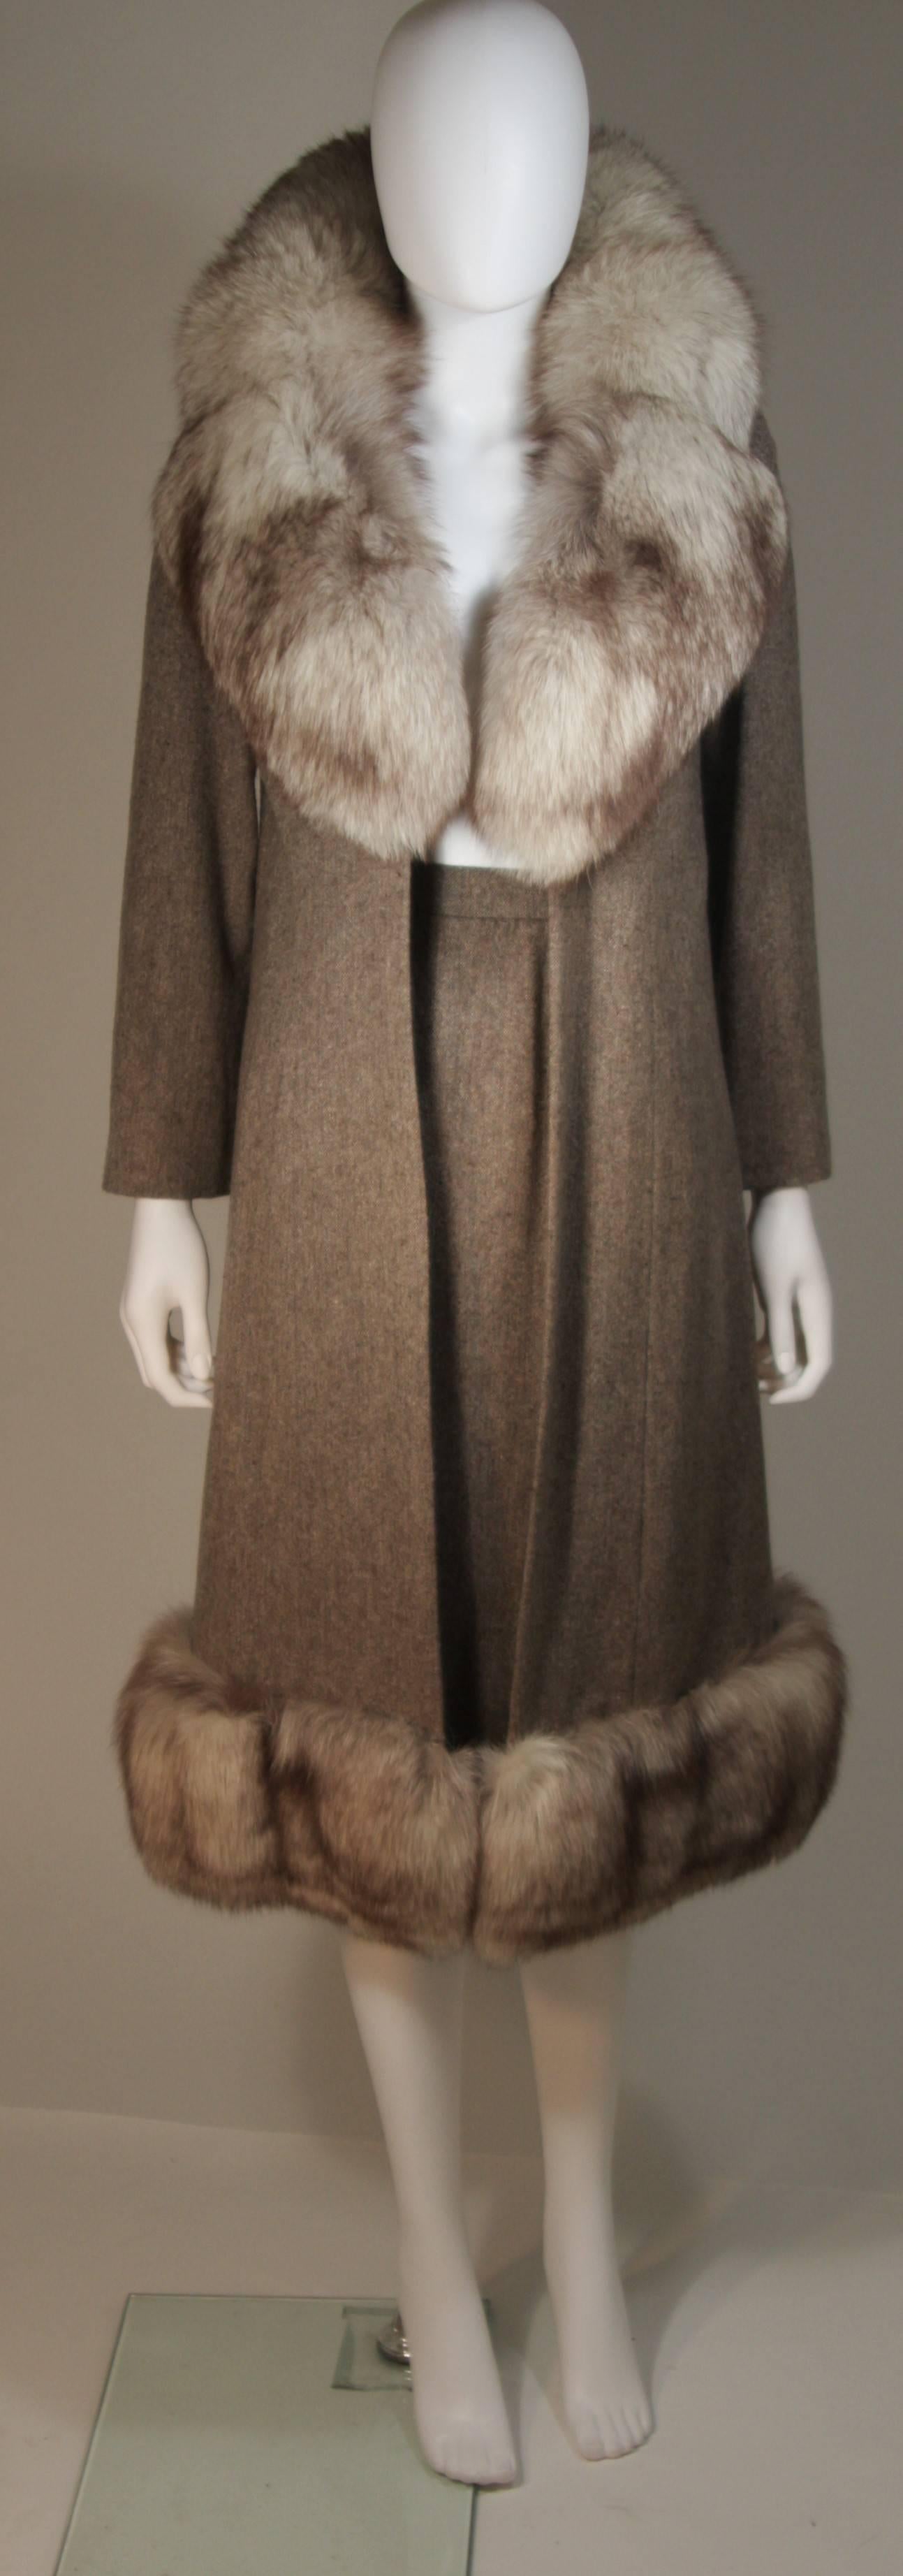 full length wool coats with fox fur trim